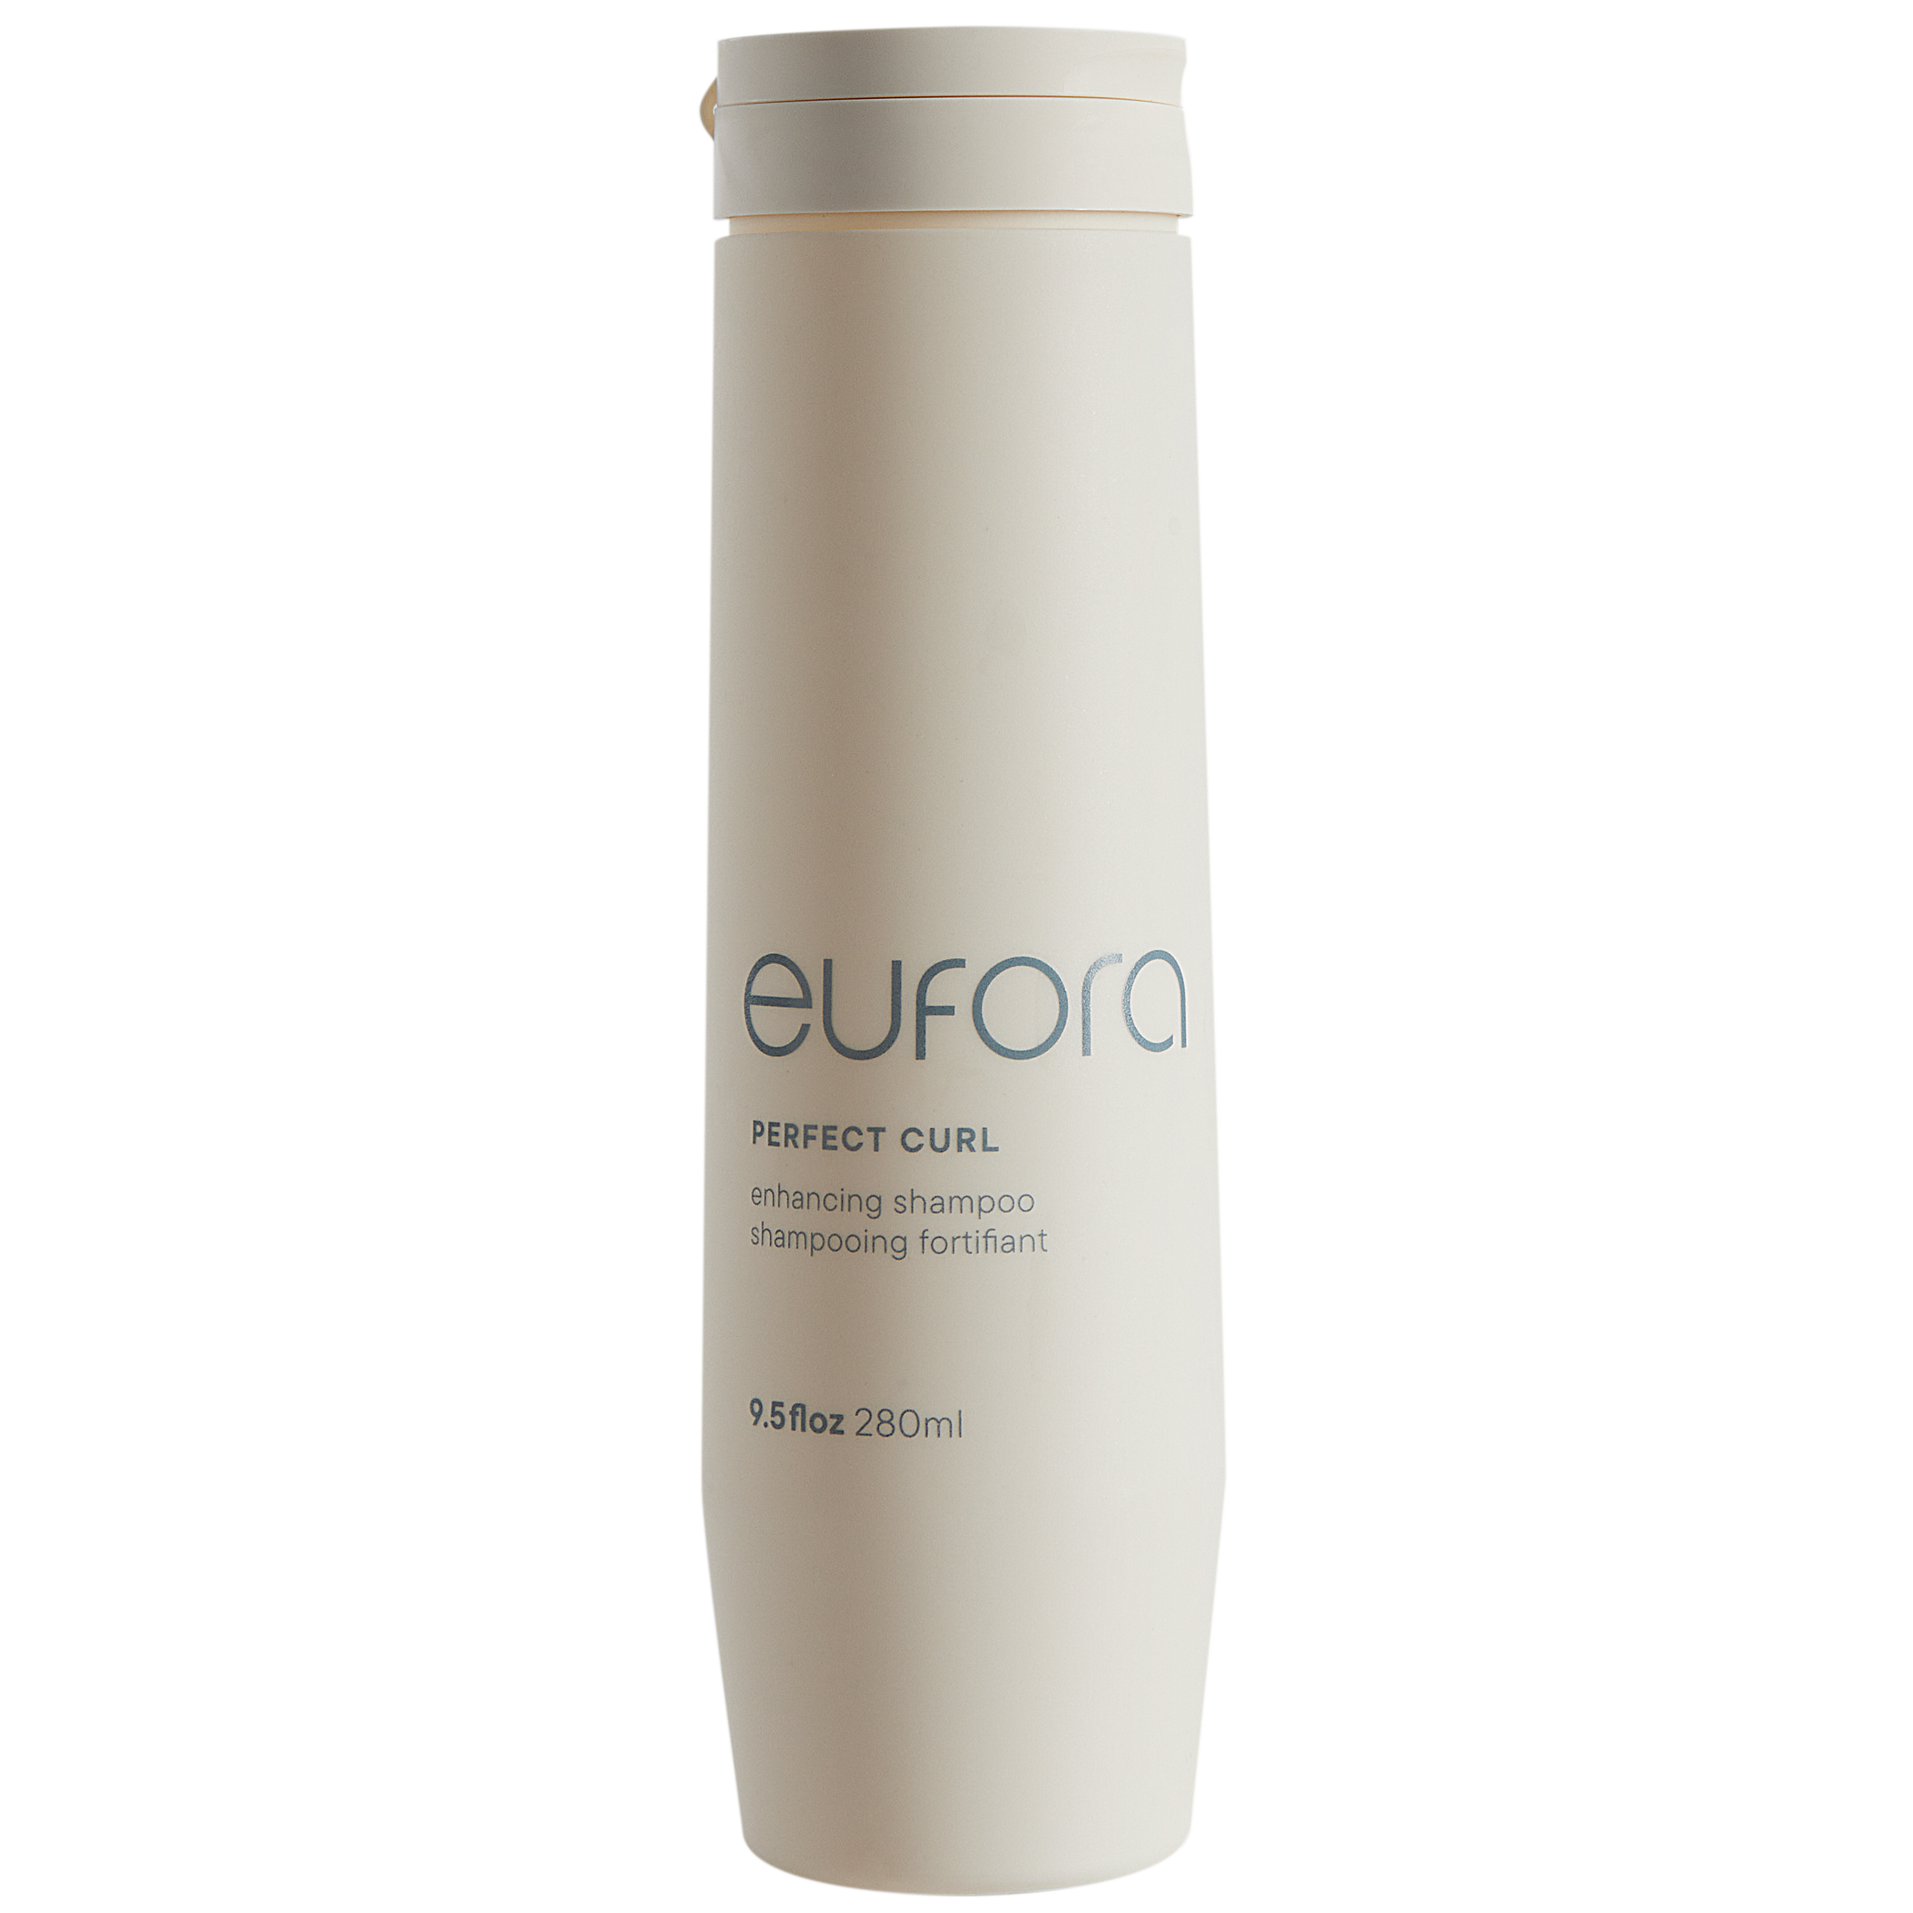 Eufora PERFECT CURL Enhancing Shampoo